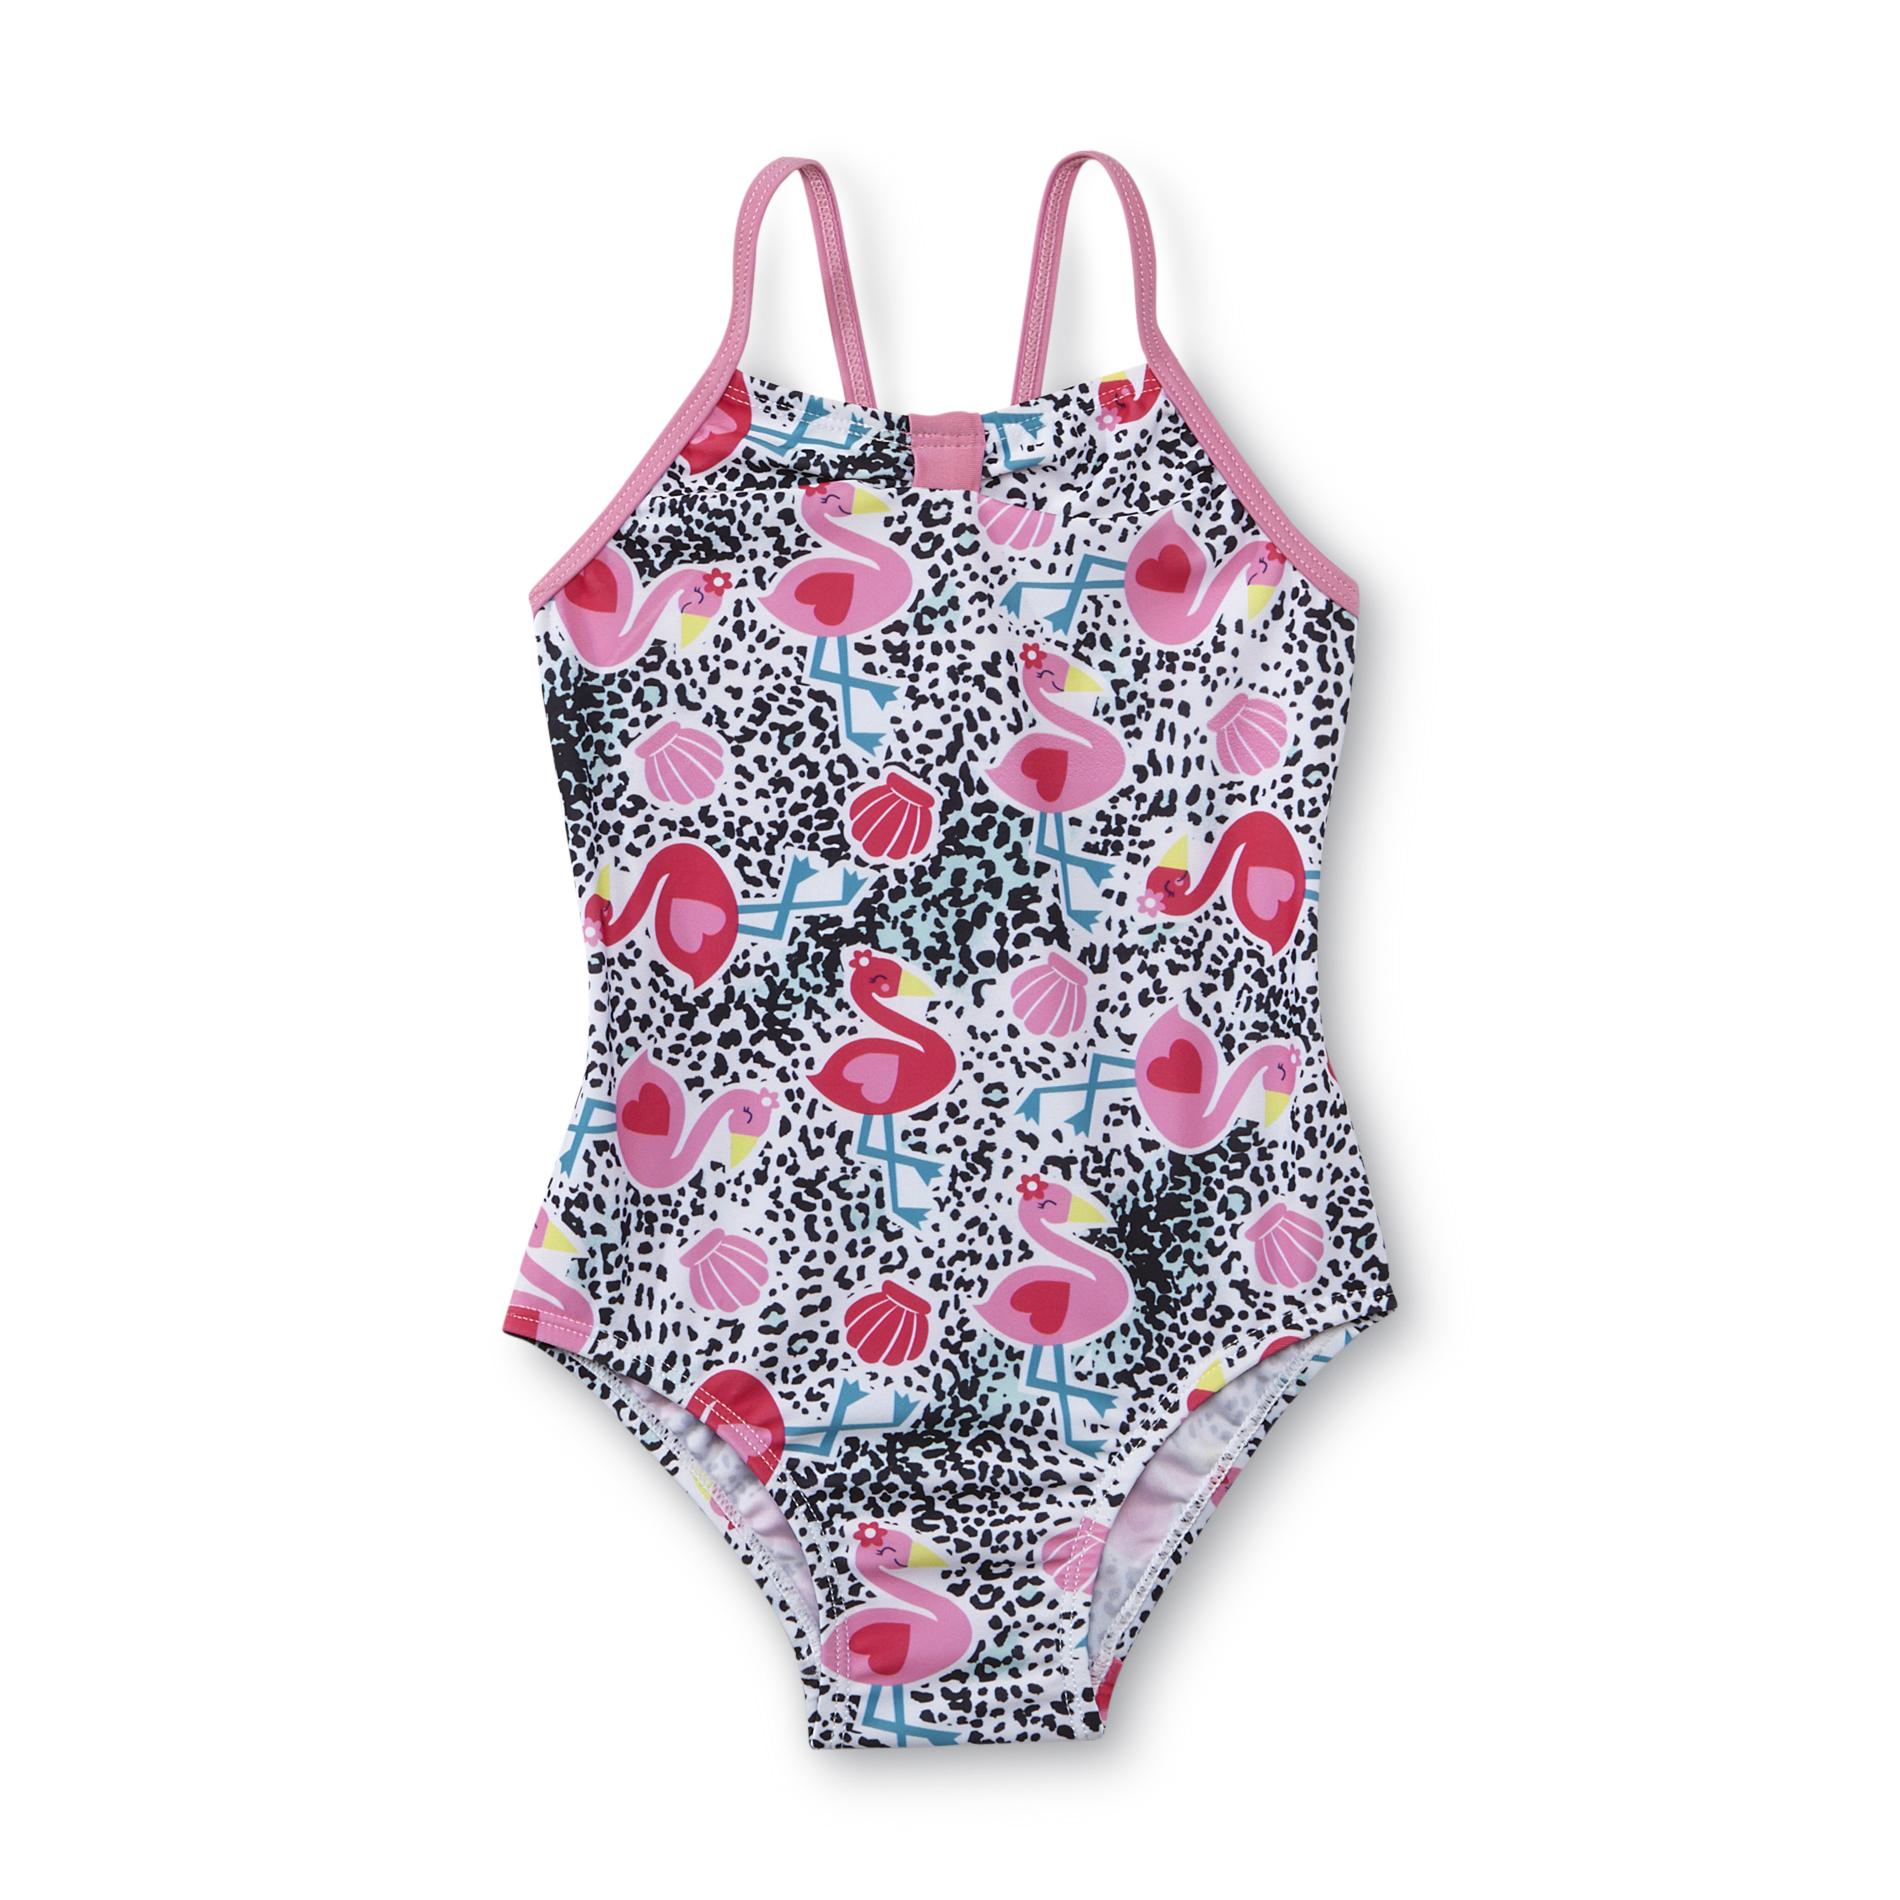 Joe Boxer Toddler Girl's Swimsuit - Flamingo